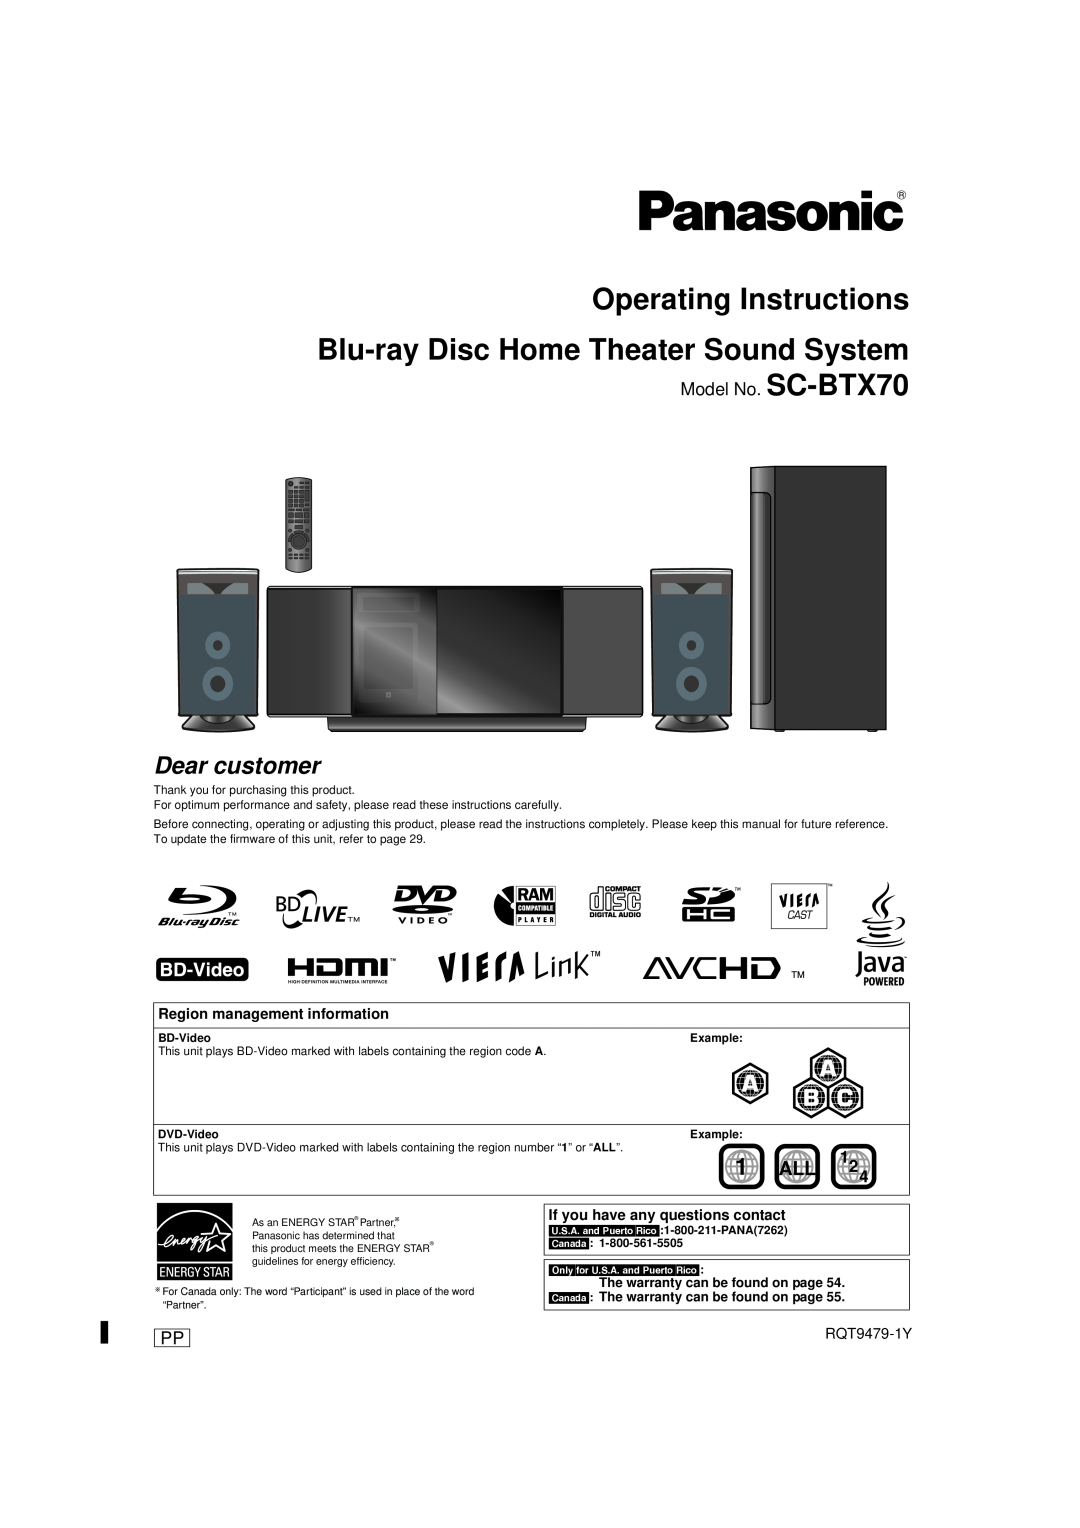 Panasonic manual Model No. SC-BTX70, Eb Eg, RQT9464-B, Operating Instructions, Blu-rayDisc Home Theater Sound System 